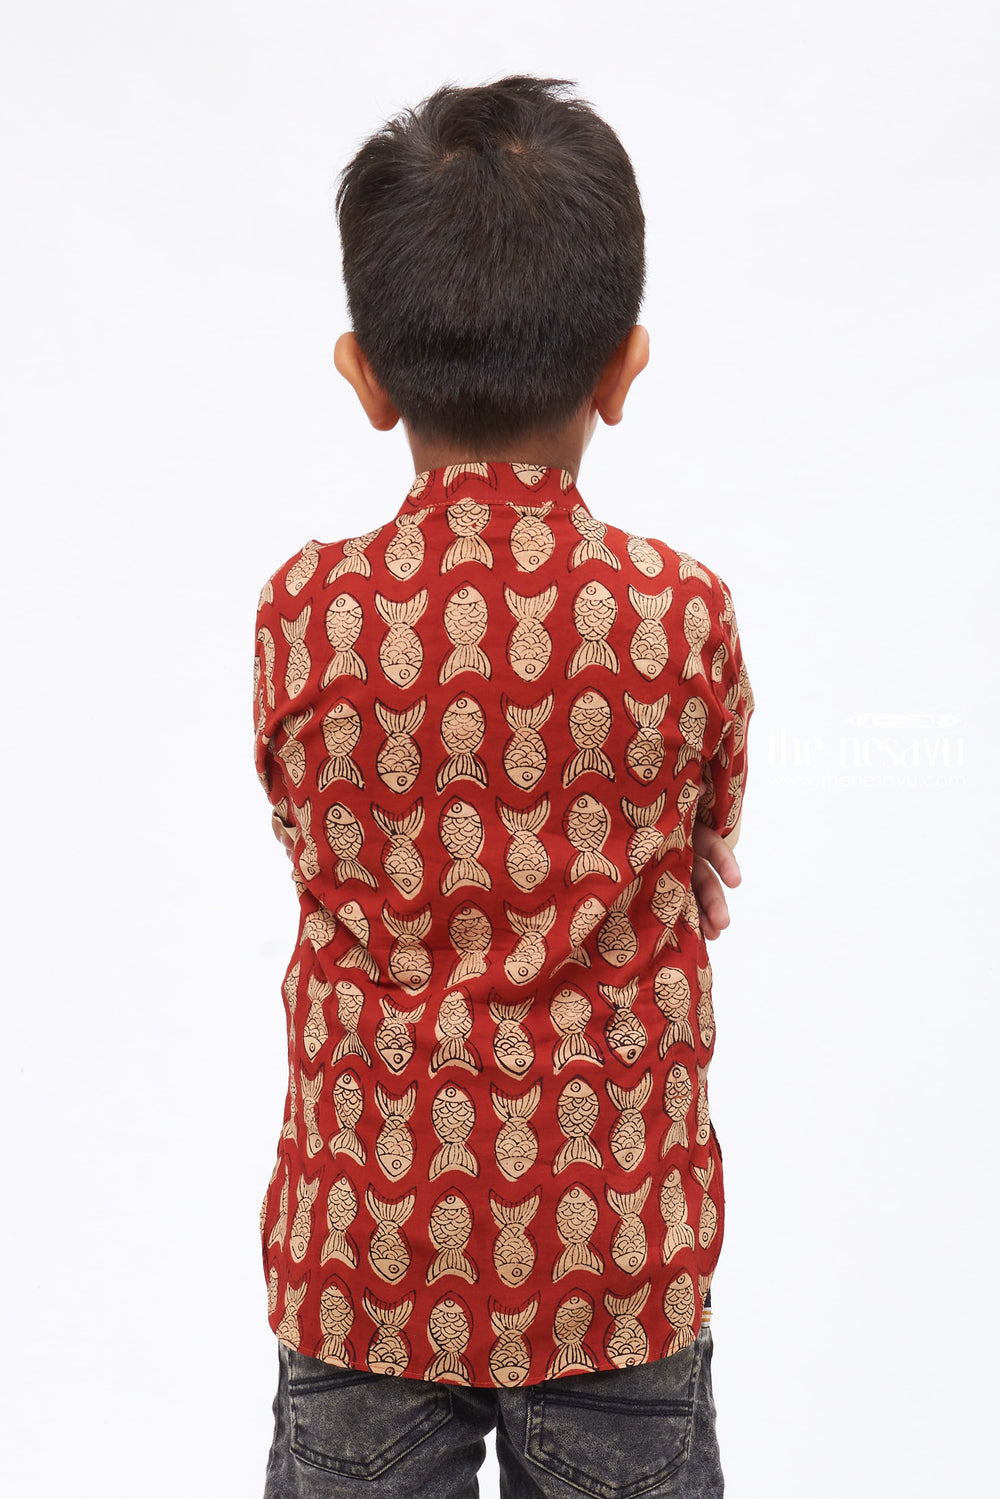 The Nesavu Boys Kurtha Shirt Boys Playful Fish Patterned Ruby Red Cotton Shirt Nesavu Best Price Guaranteed: Boys Kurta Shirts | Traditional and Contemporary Designs | The Nesavu